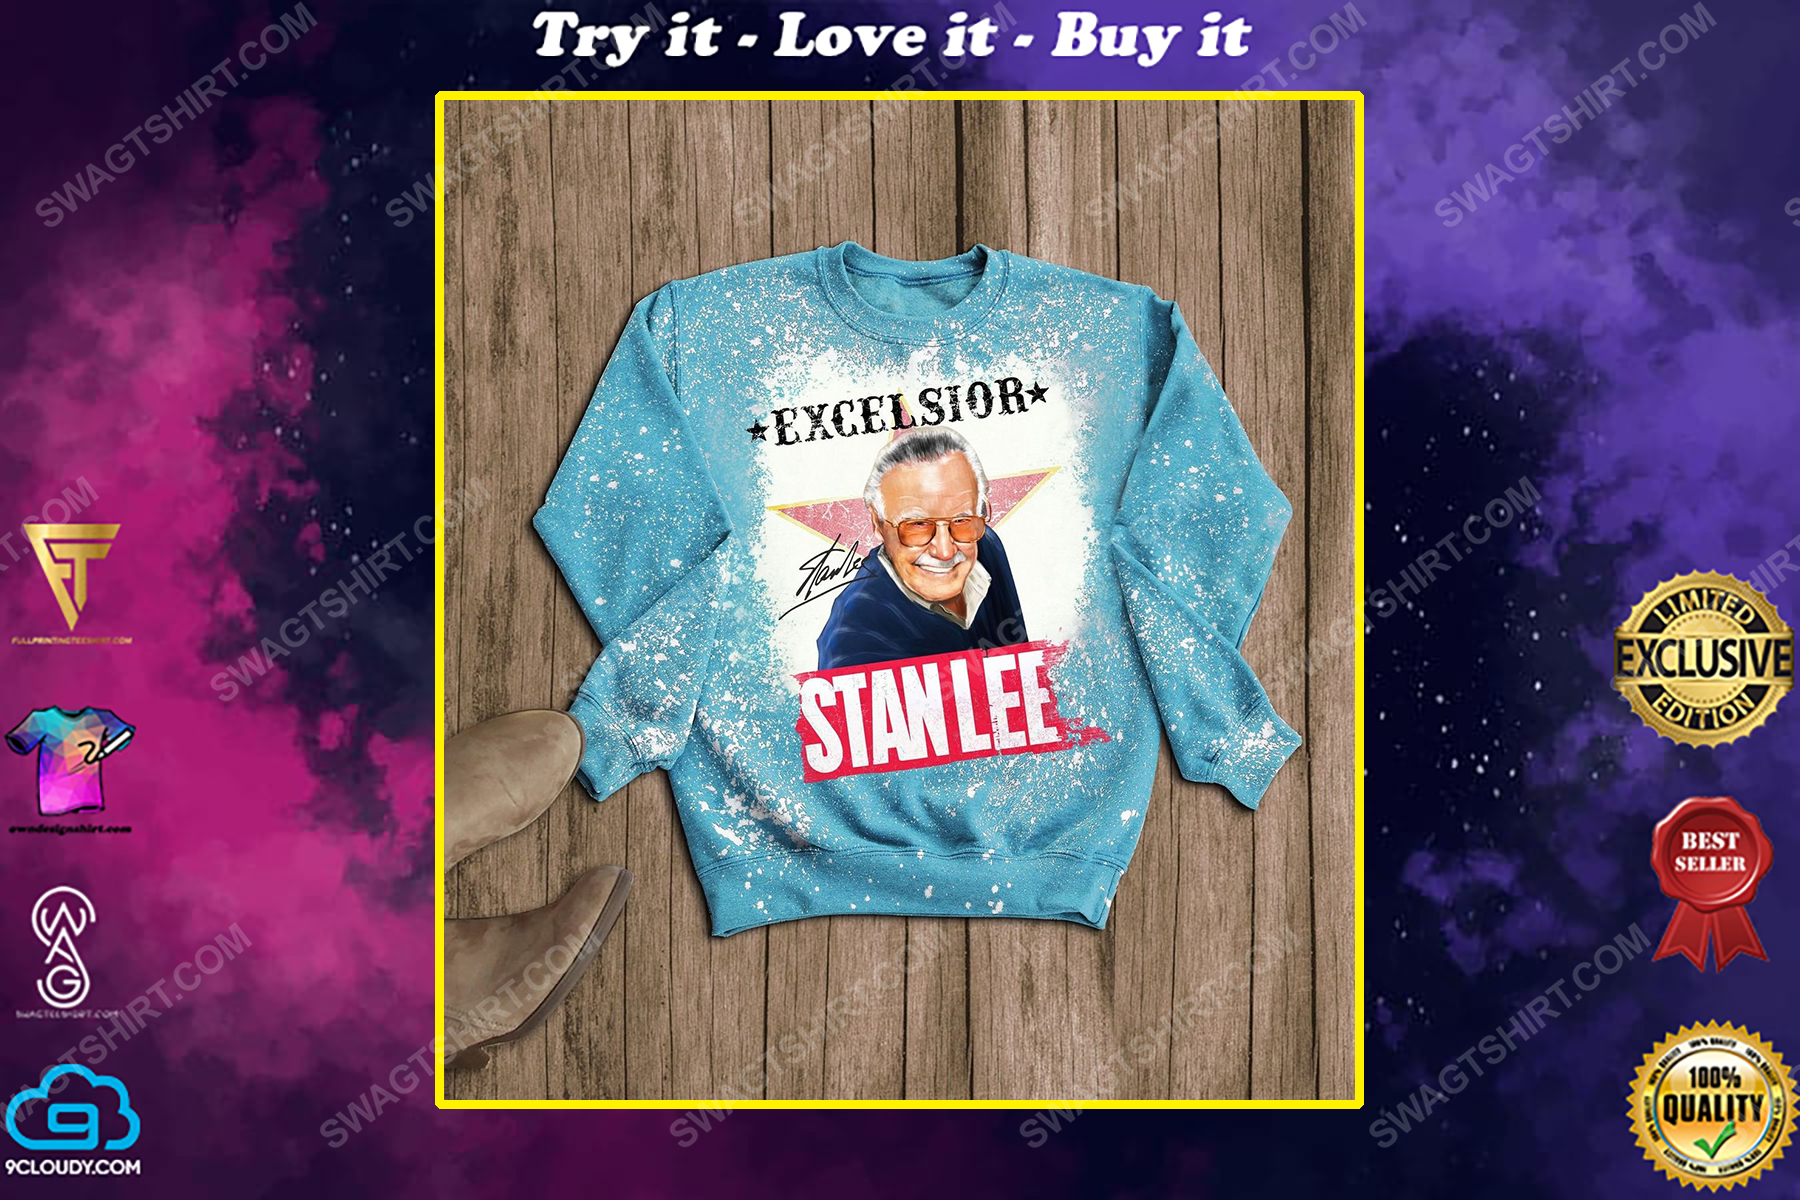 Stan lee excelsior full print pajamas set